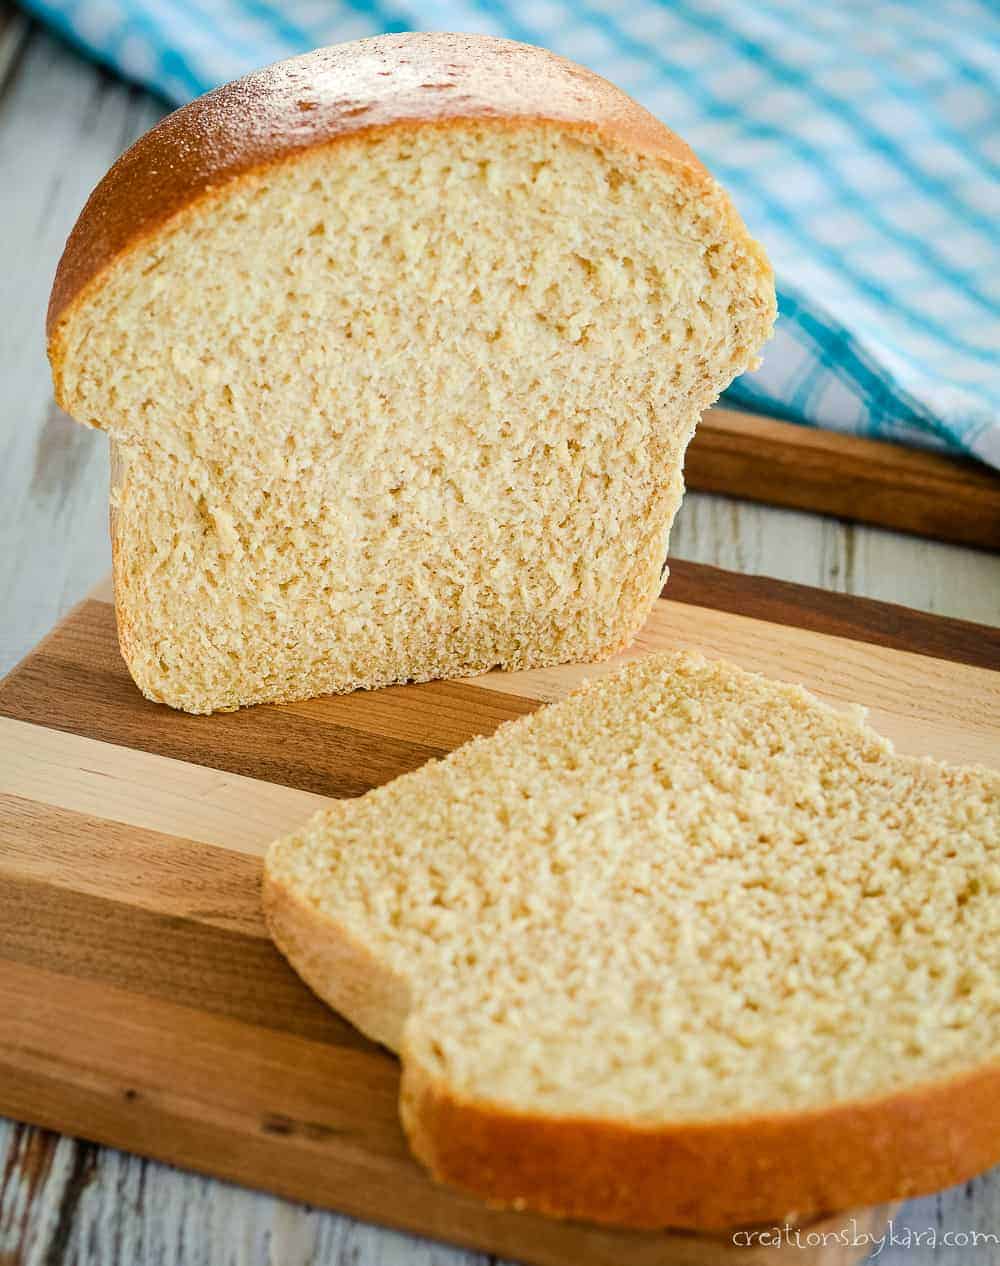 Kitchenaid Whole Wheat Bread Recipe 